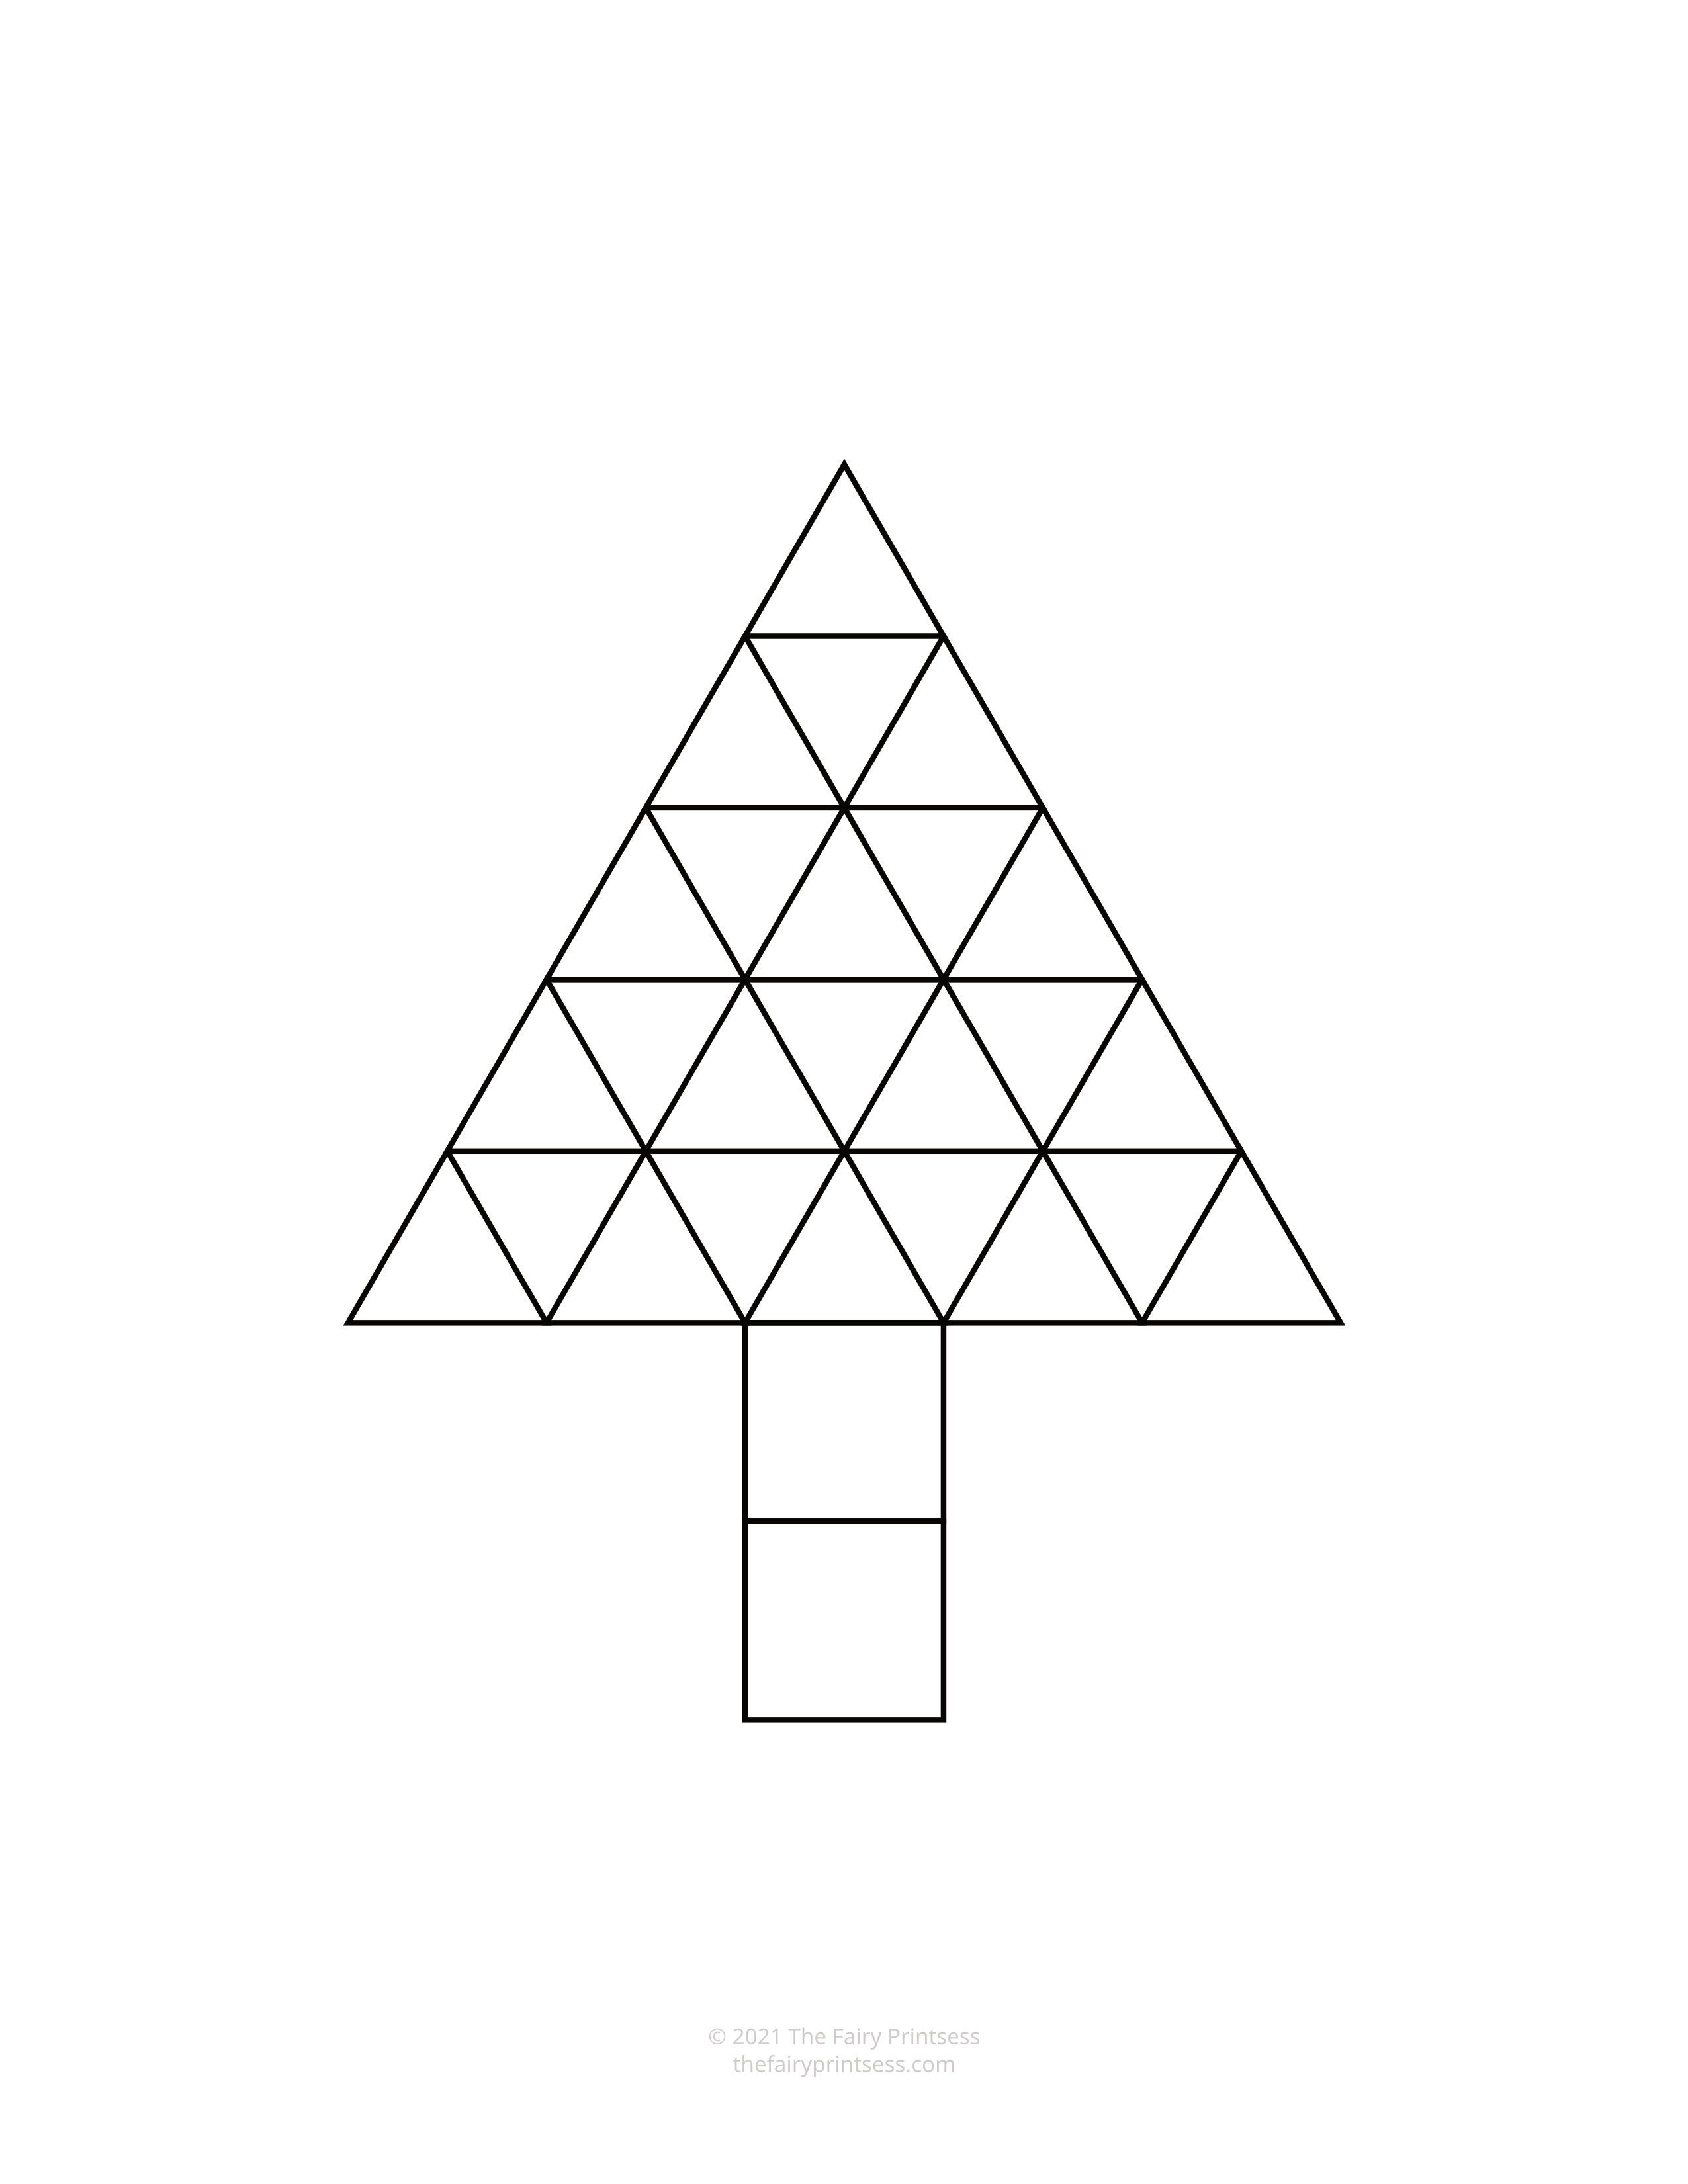 black and white Christmas tree pattern block template shape mat free printable